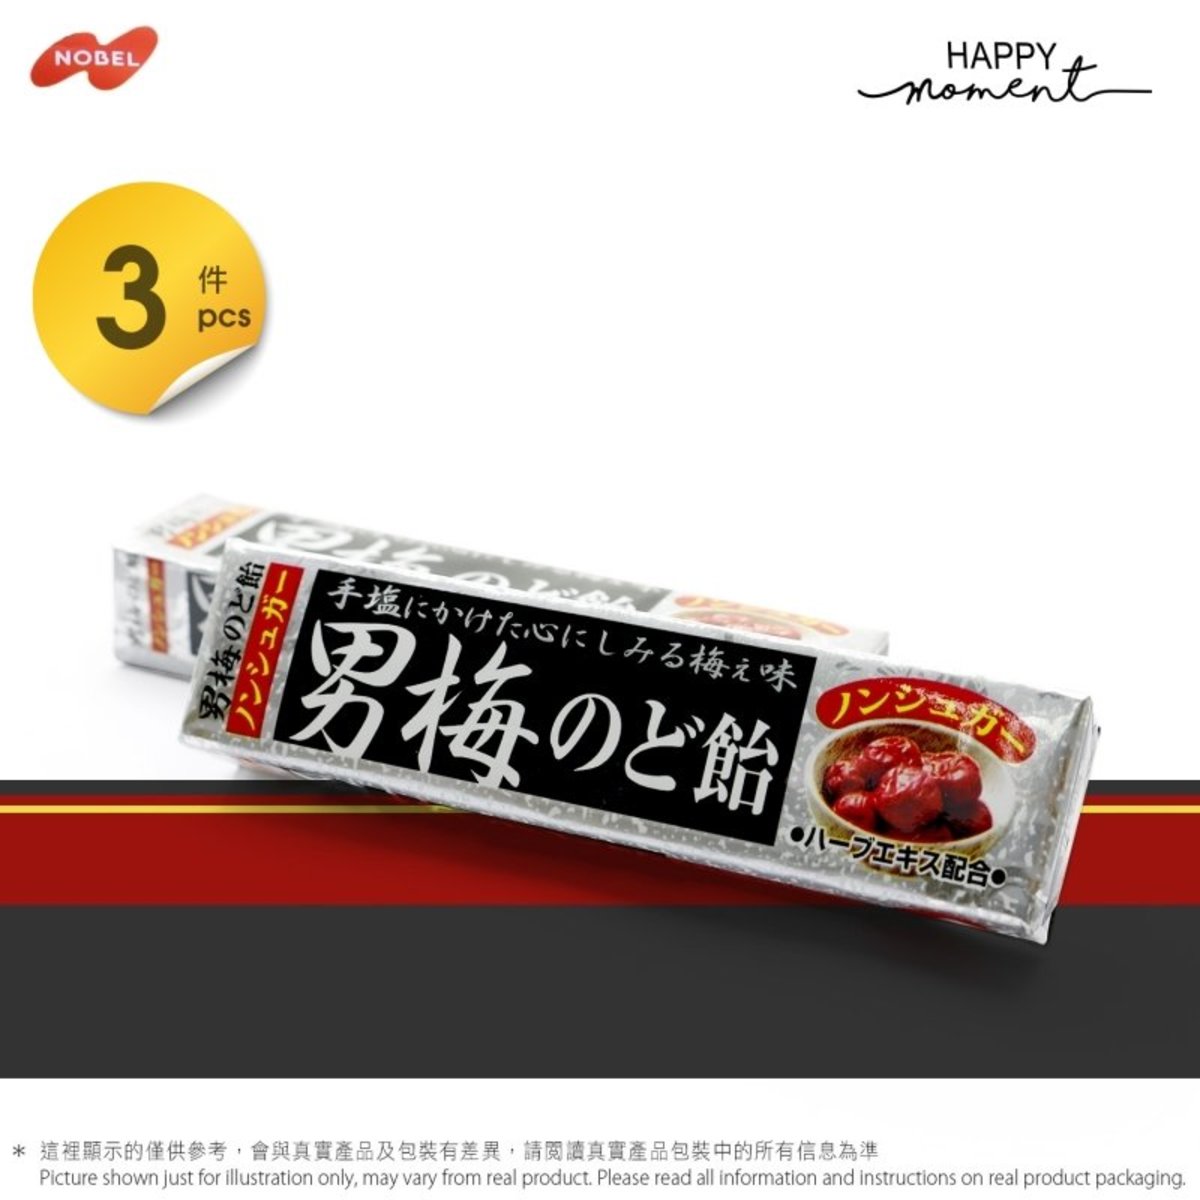 Nobel 3件 男梅喉糖10粒裝nobel Ume Plum Candy 10s 43g X3 Hktvmall 香港最大網購平台